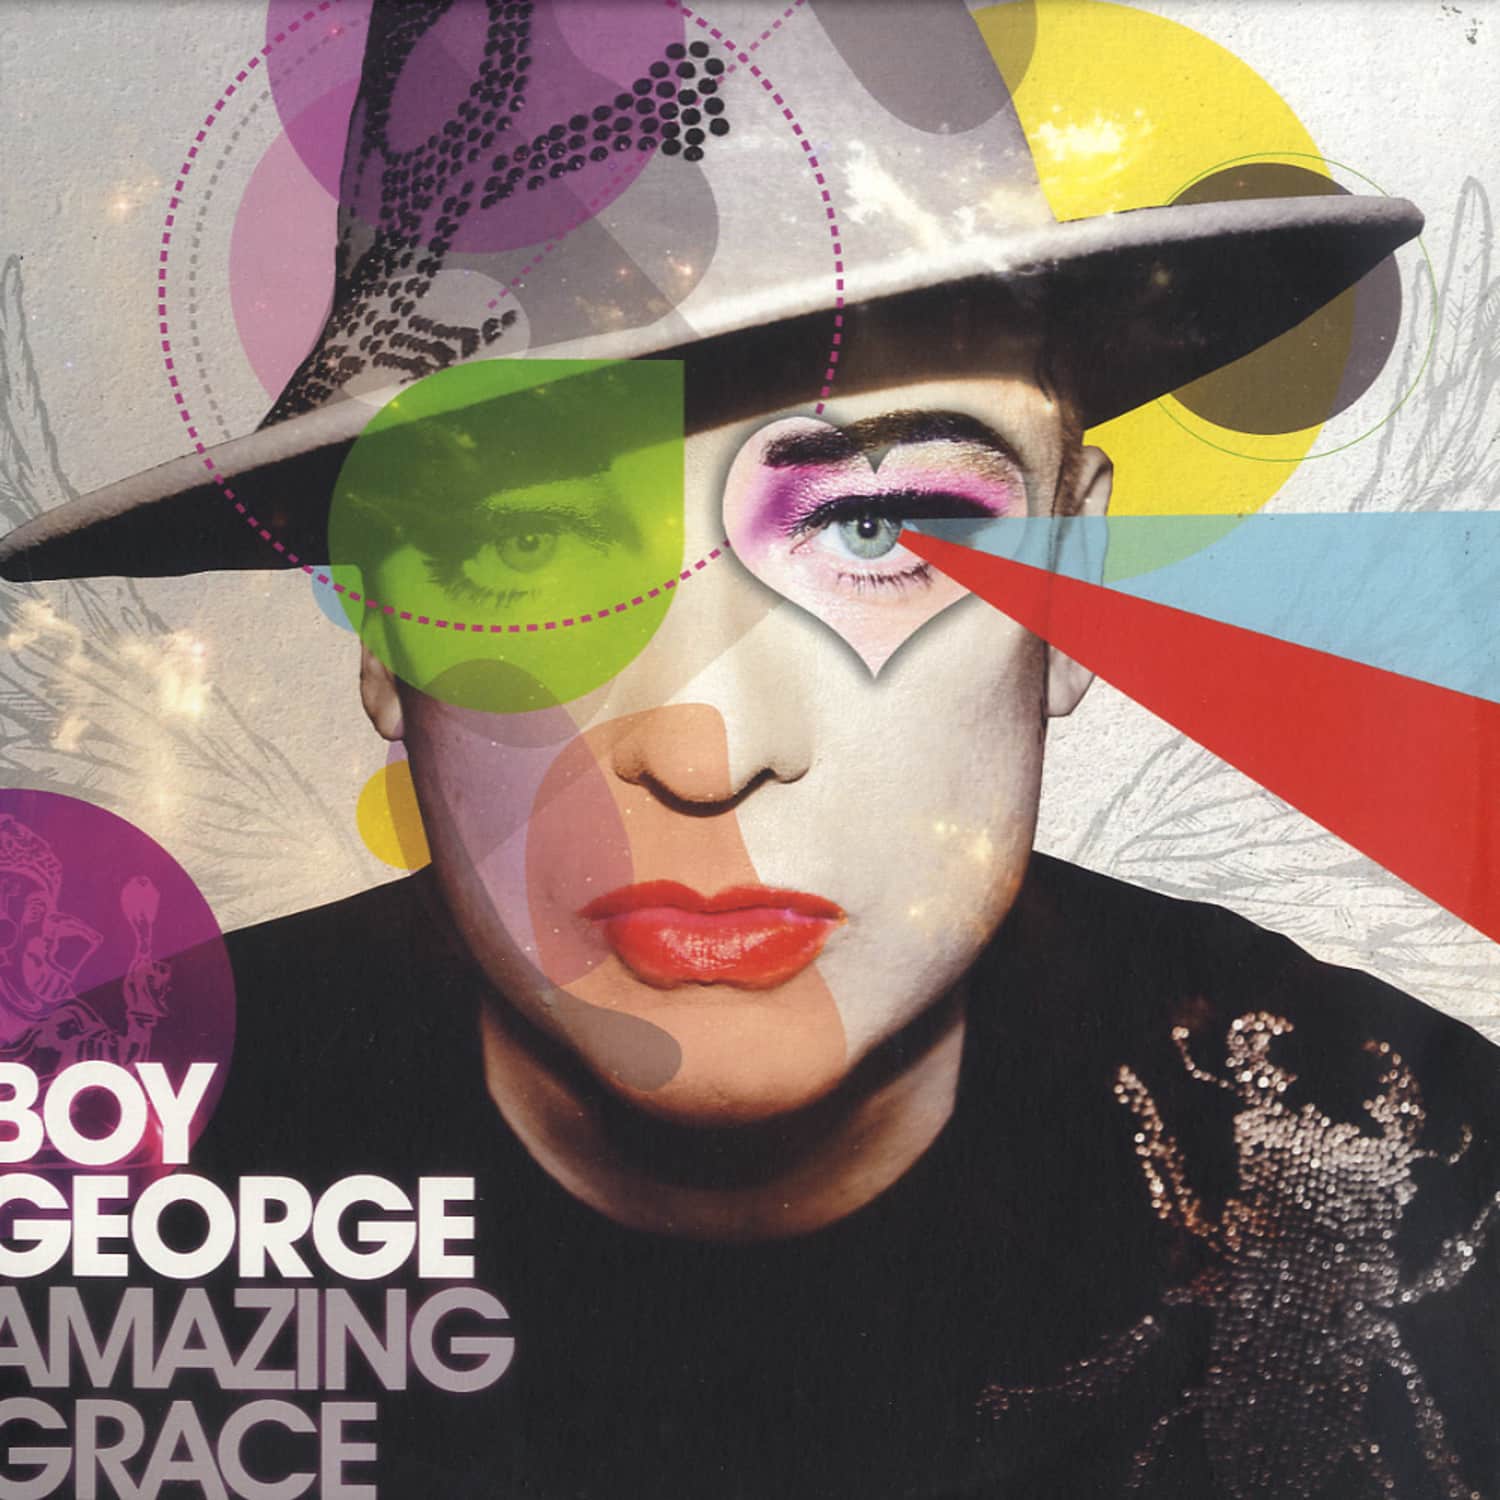 Boy George - AMAZING GRACE